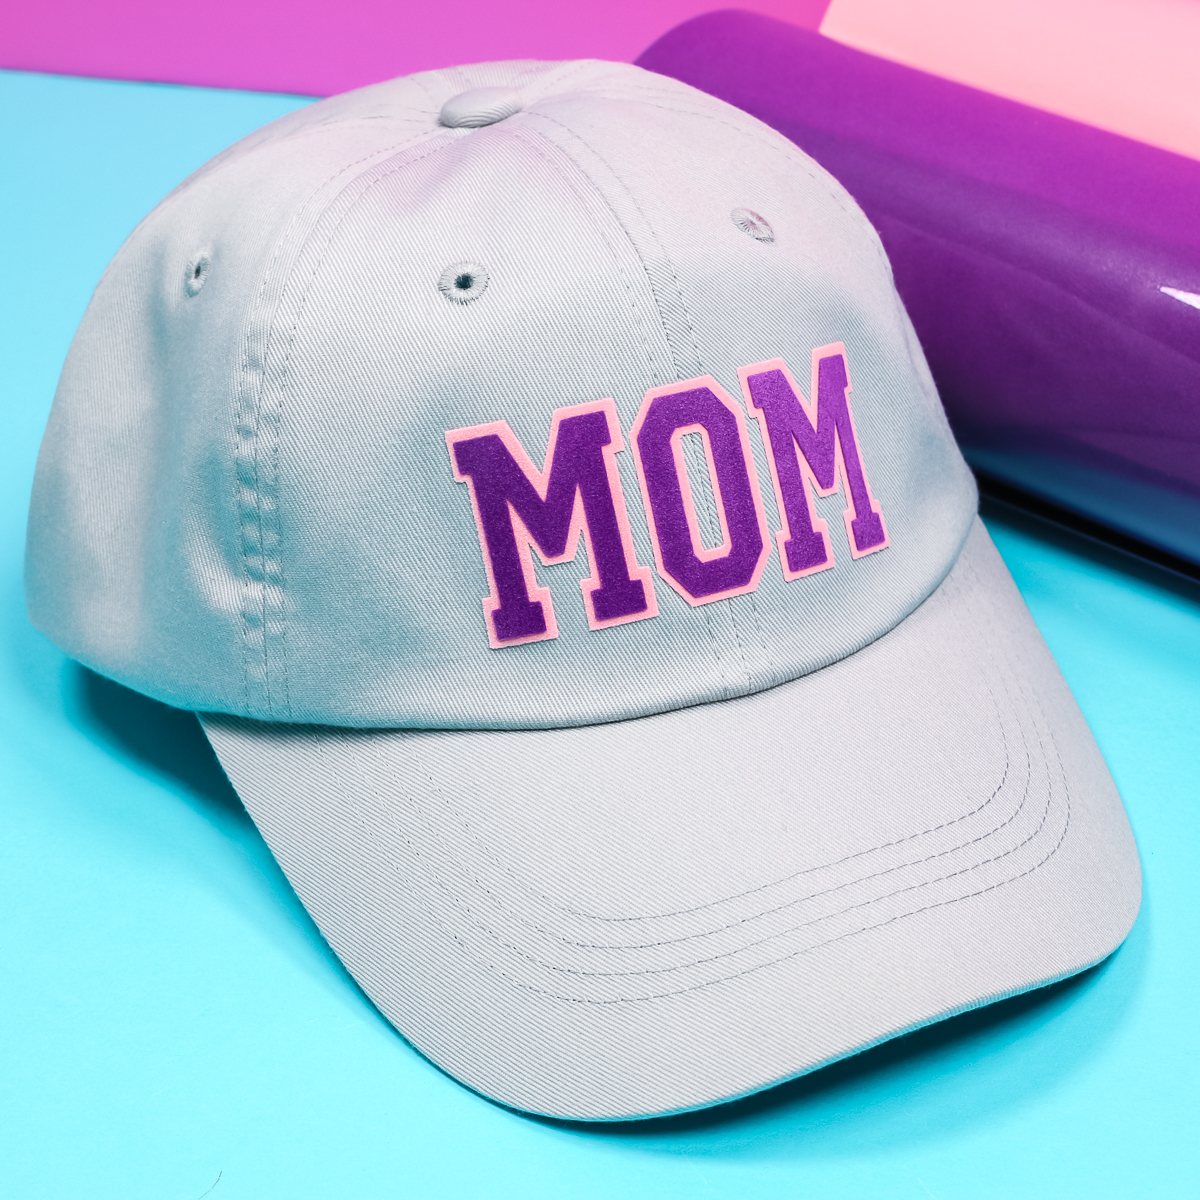 Mom's university letter cap with StripFlock Pro.